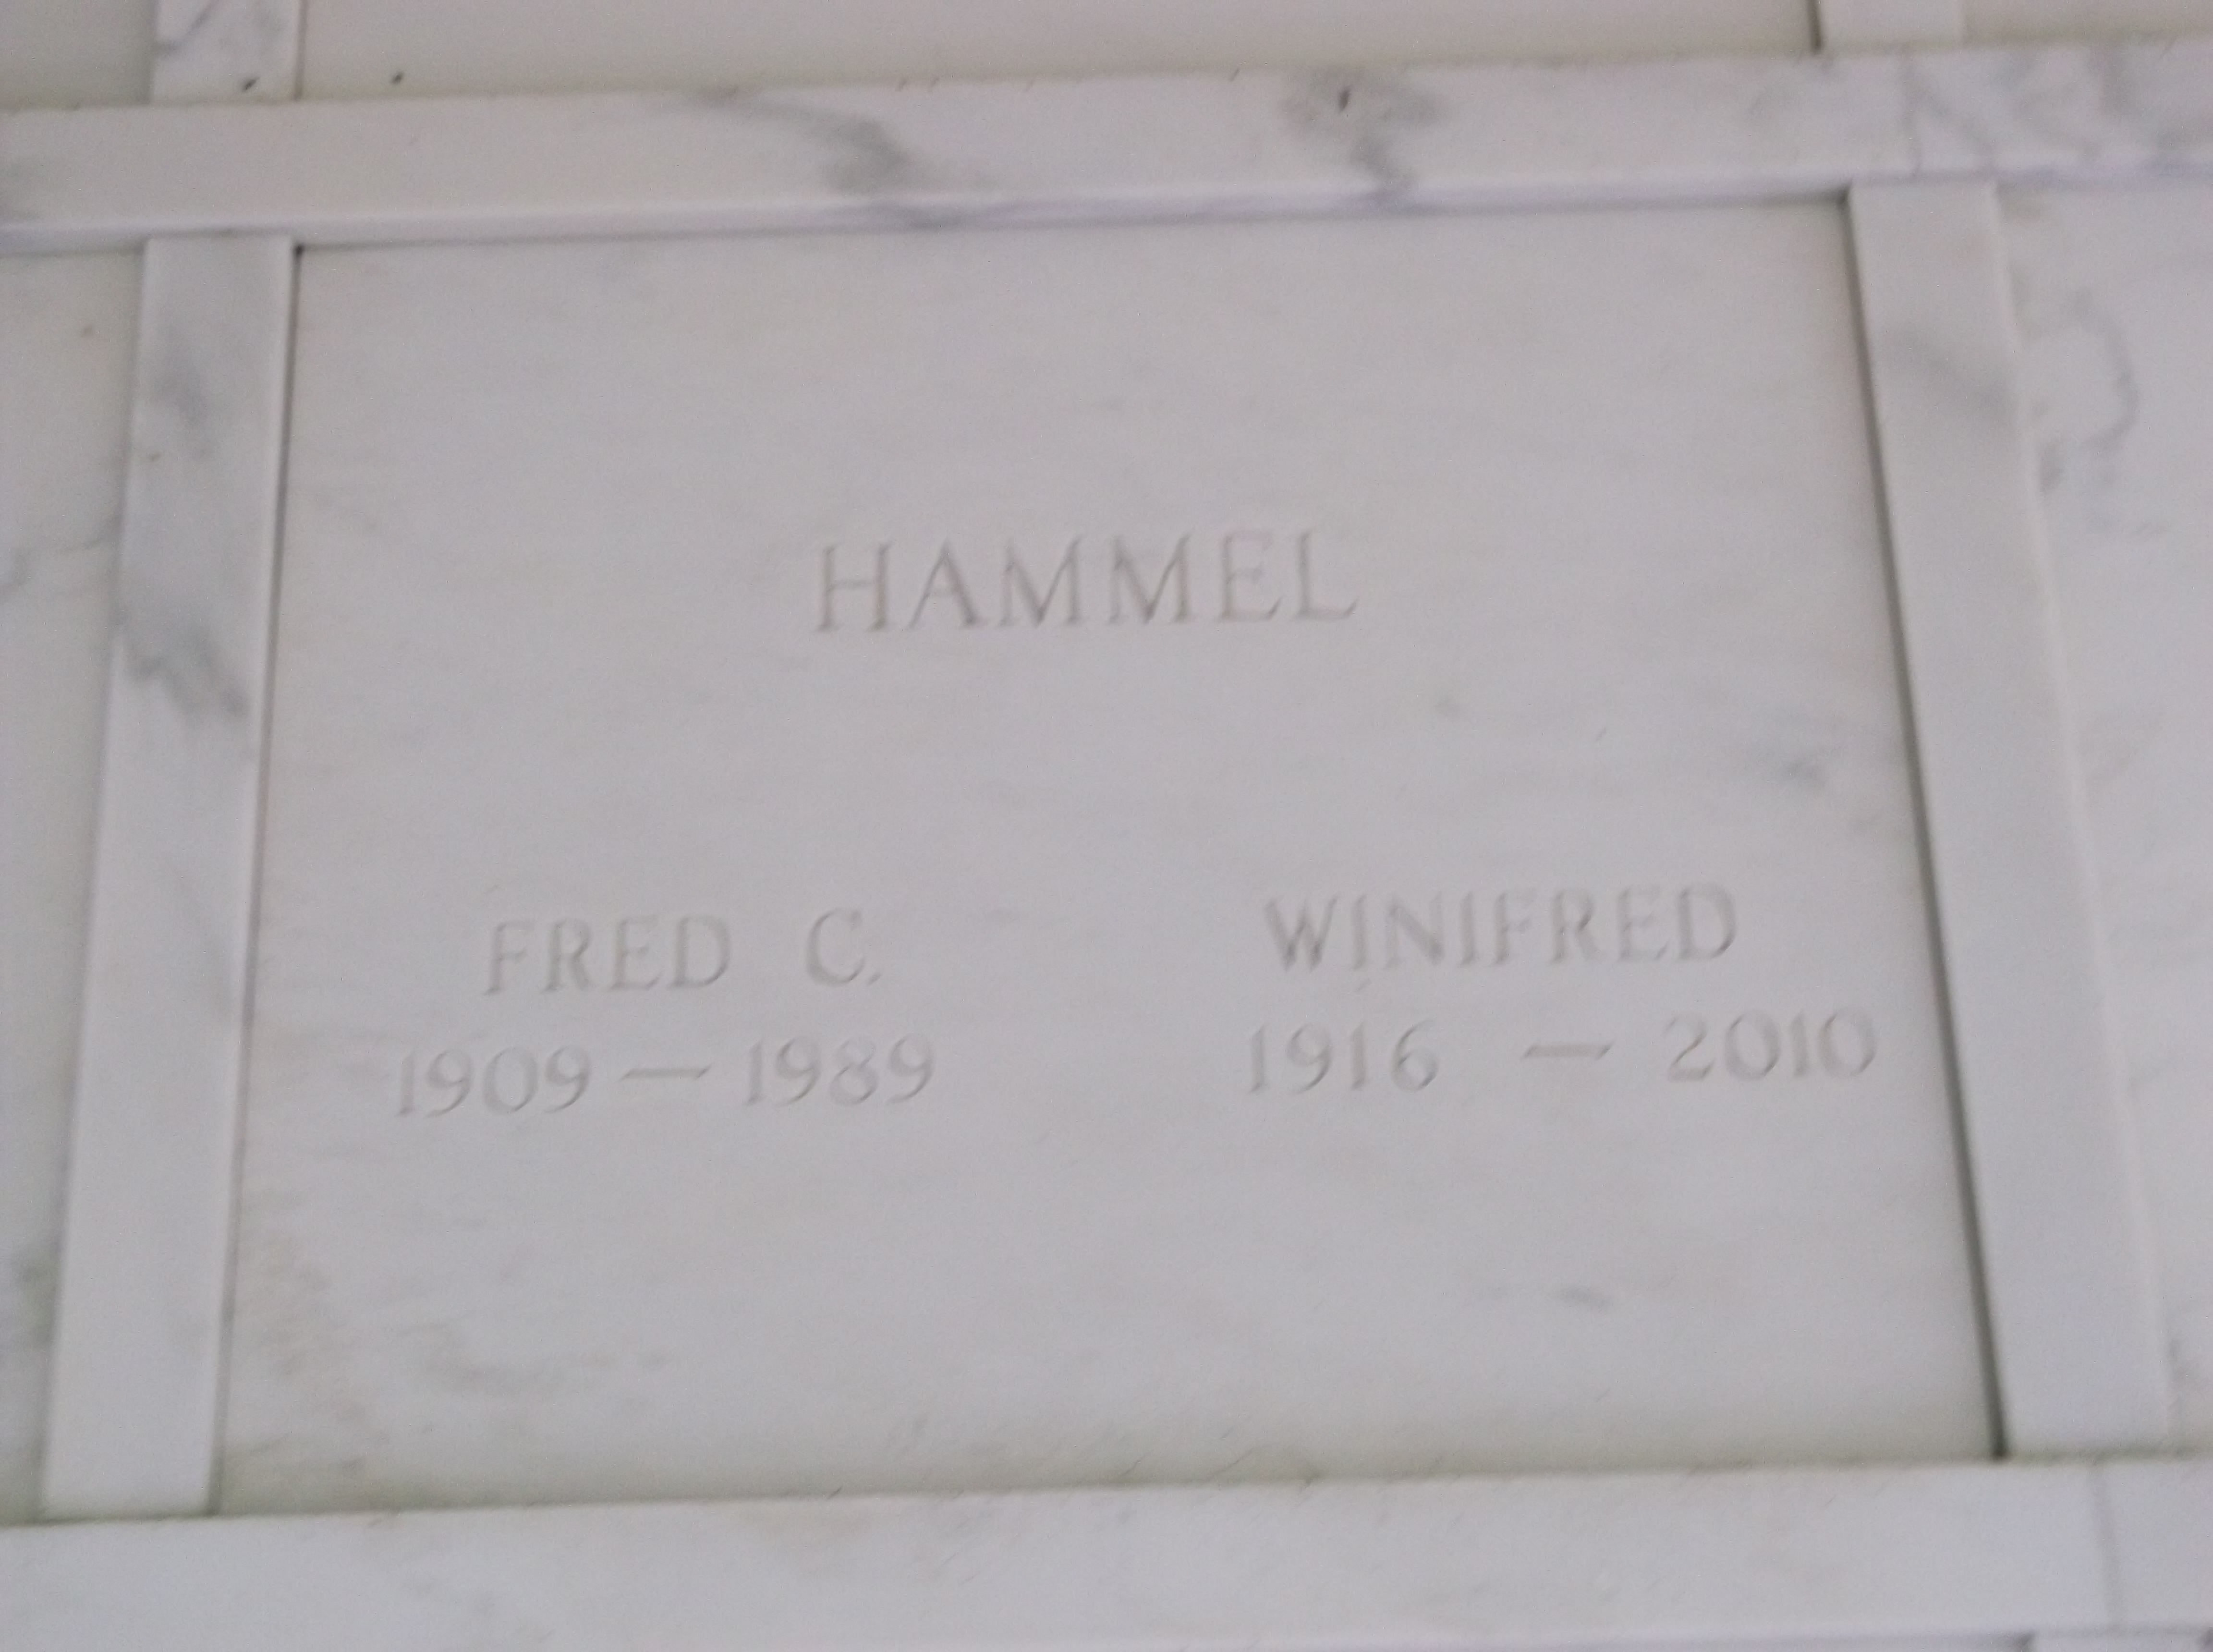 Winifred Hammel